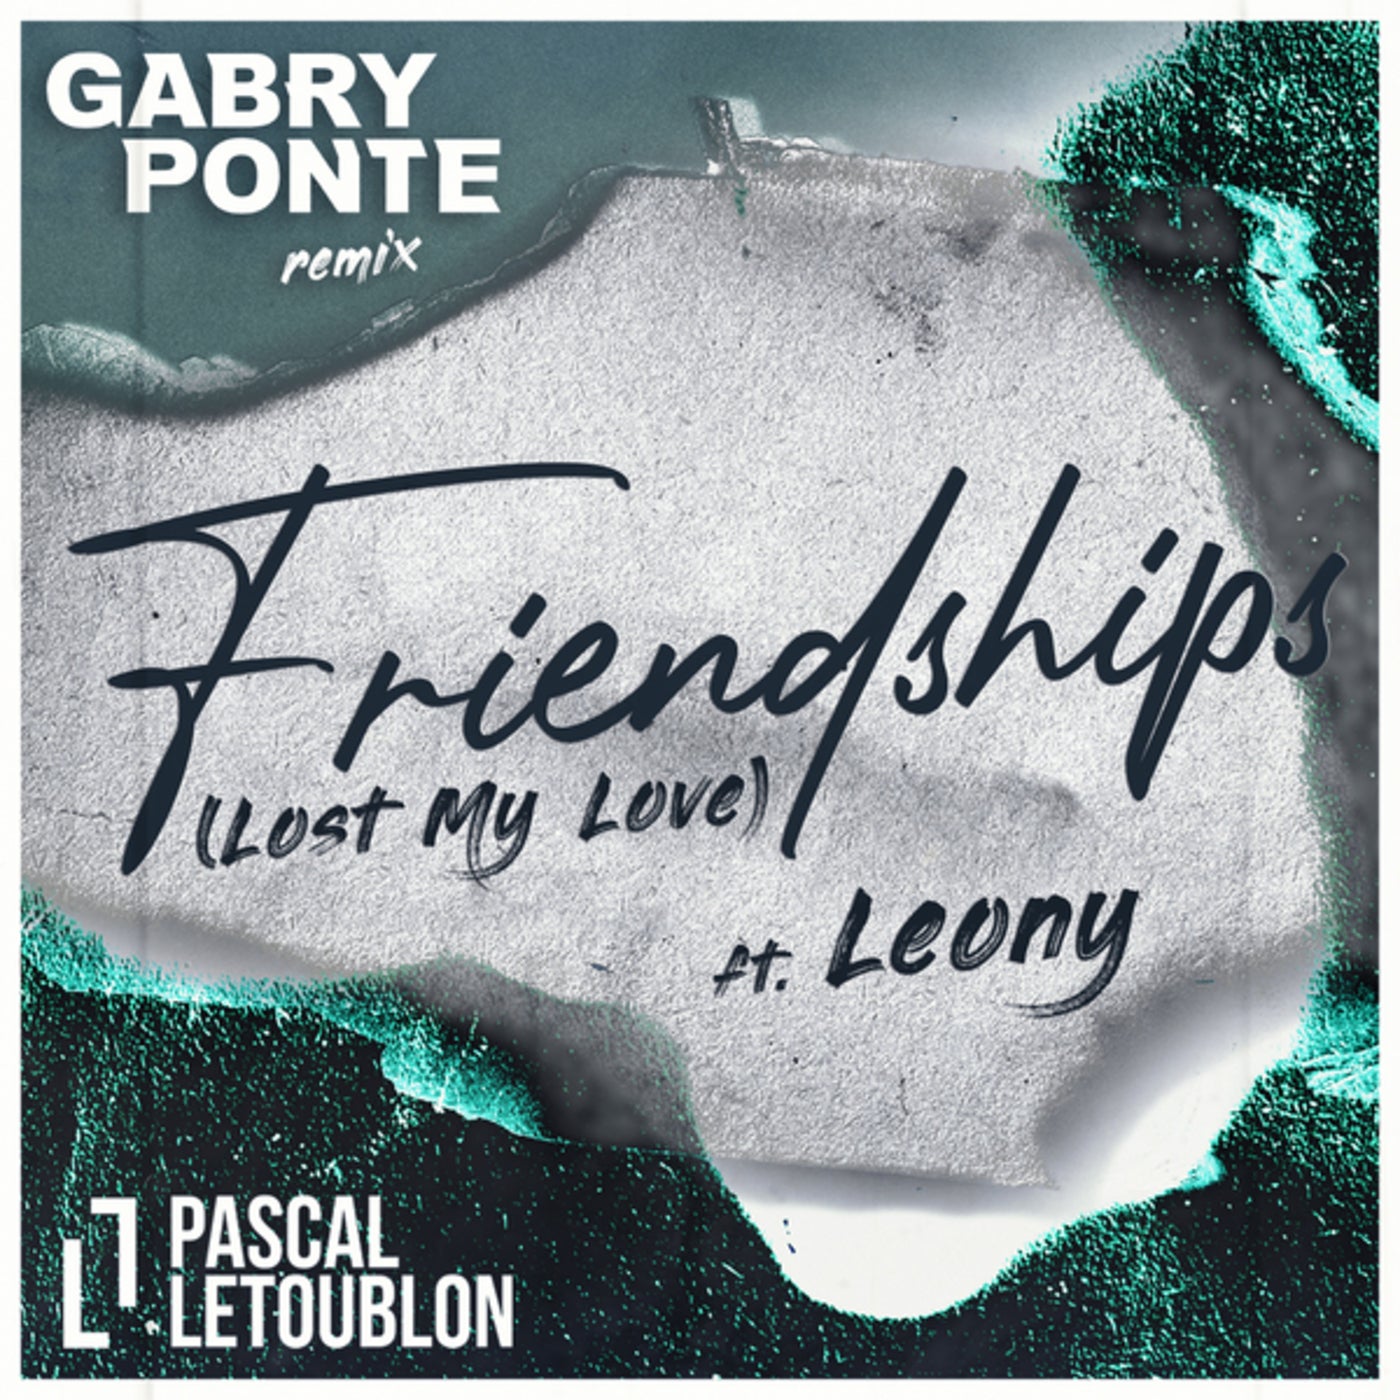 Friendship pascal рингтон. Pascal Letoublon Friendships. Pascal Letoublon, Leony - Friendships (Lost my Love). Gabry Ponte 2022. Friendships (Lost my Love) [feat. Leony!].